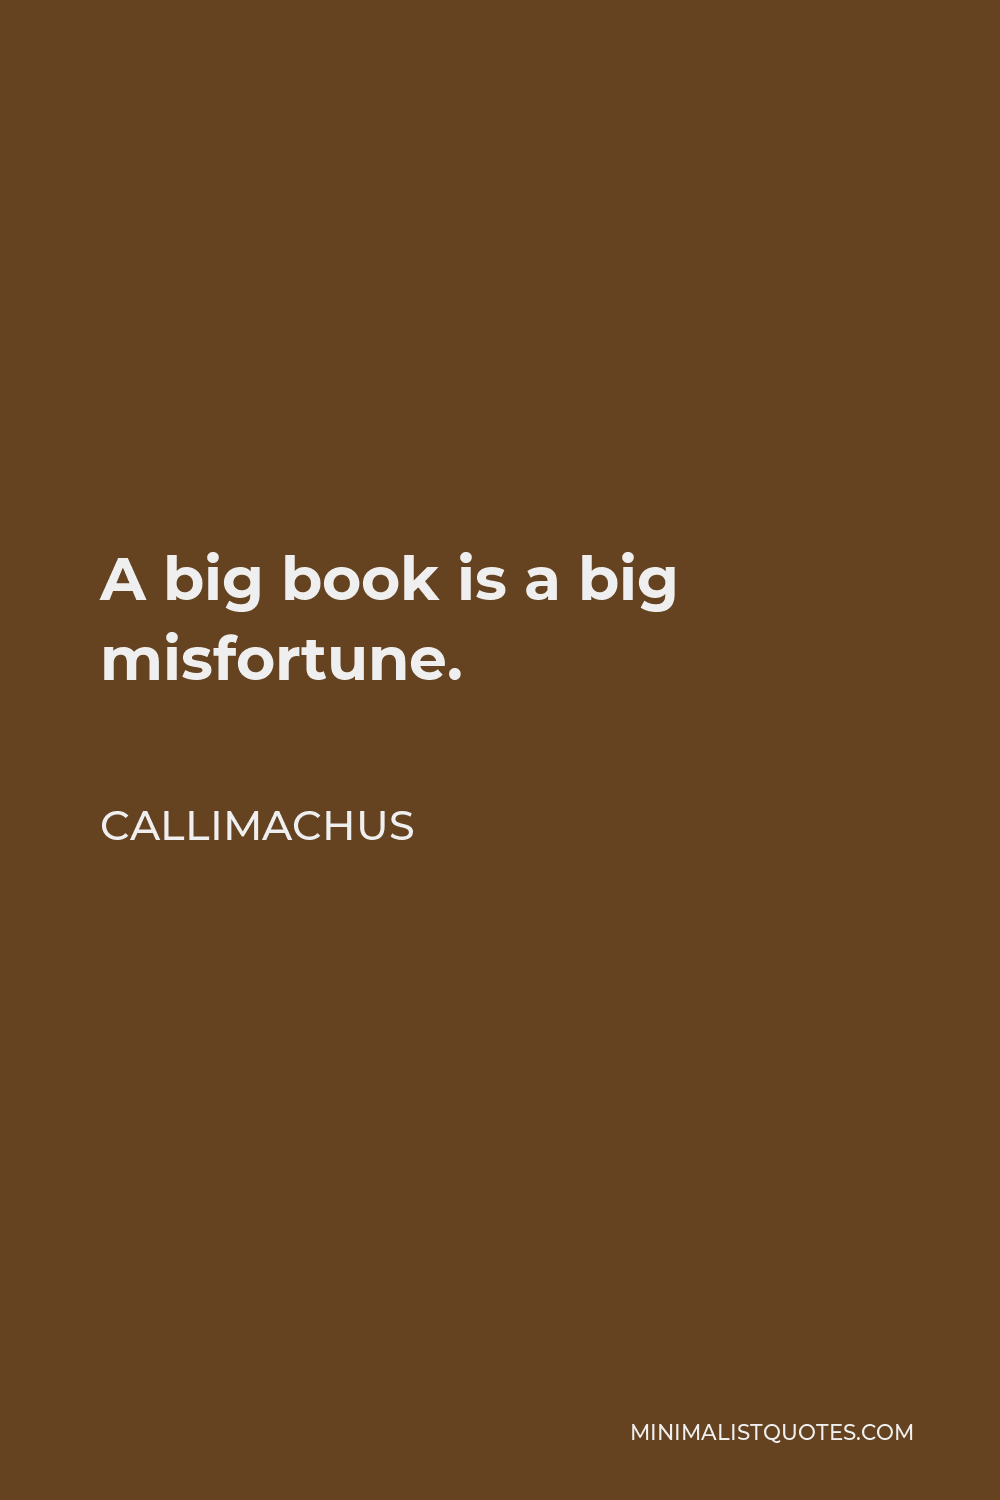 Callimachus Quote - A big book is a big misfortune.